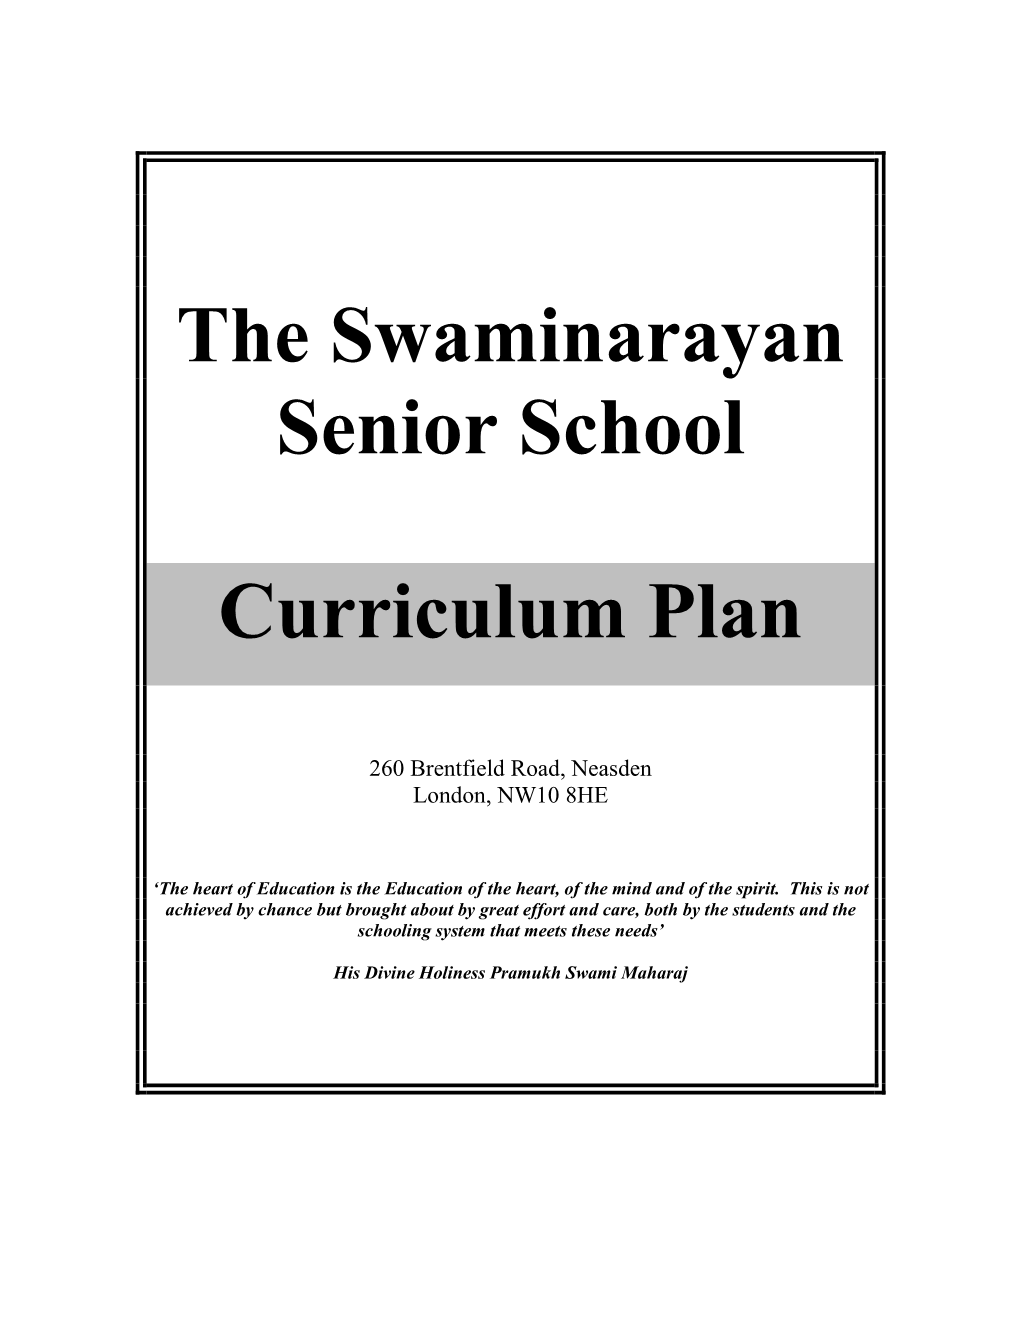 The Swaminarayan Senior School Curriculum Plan